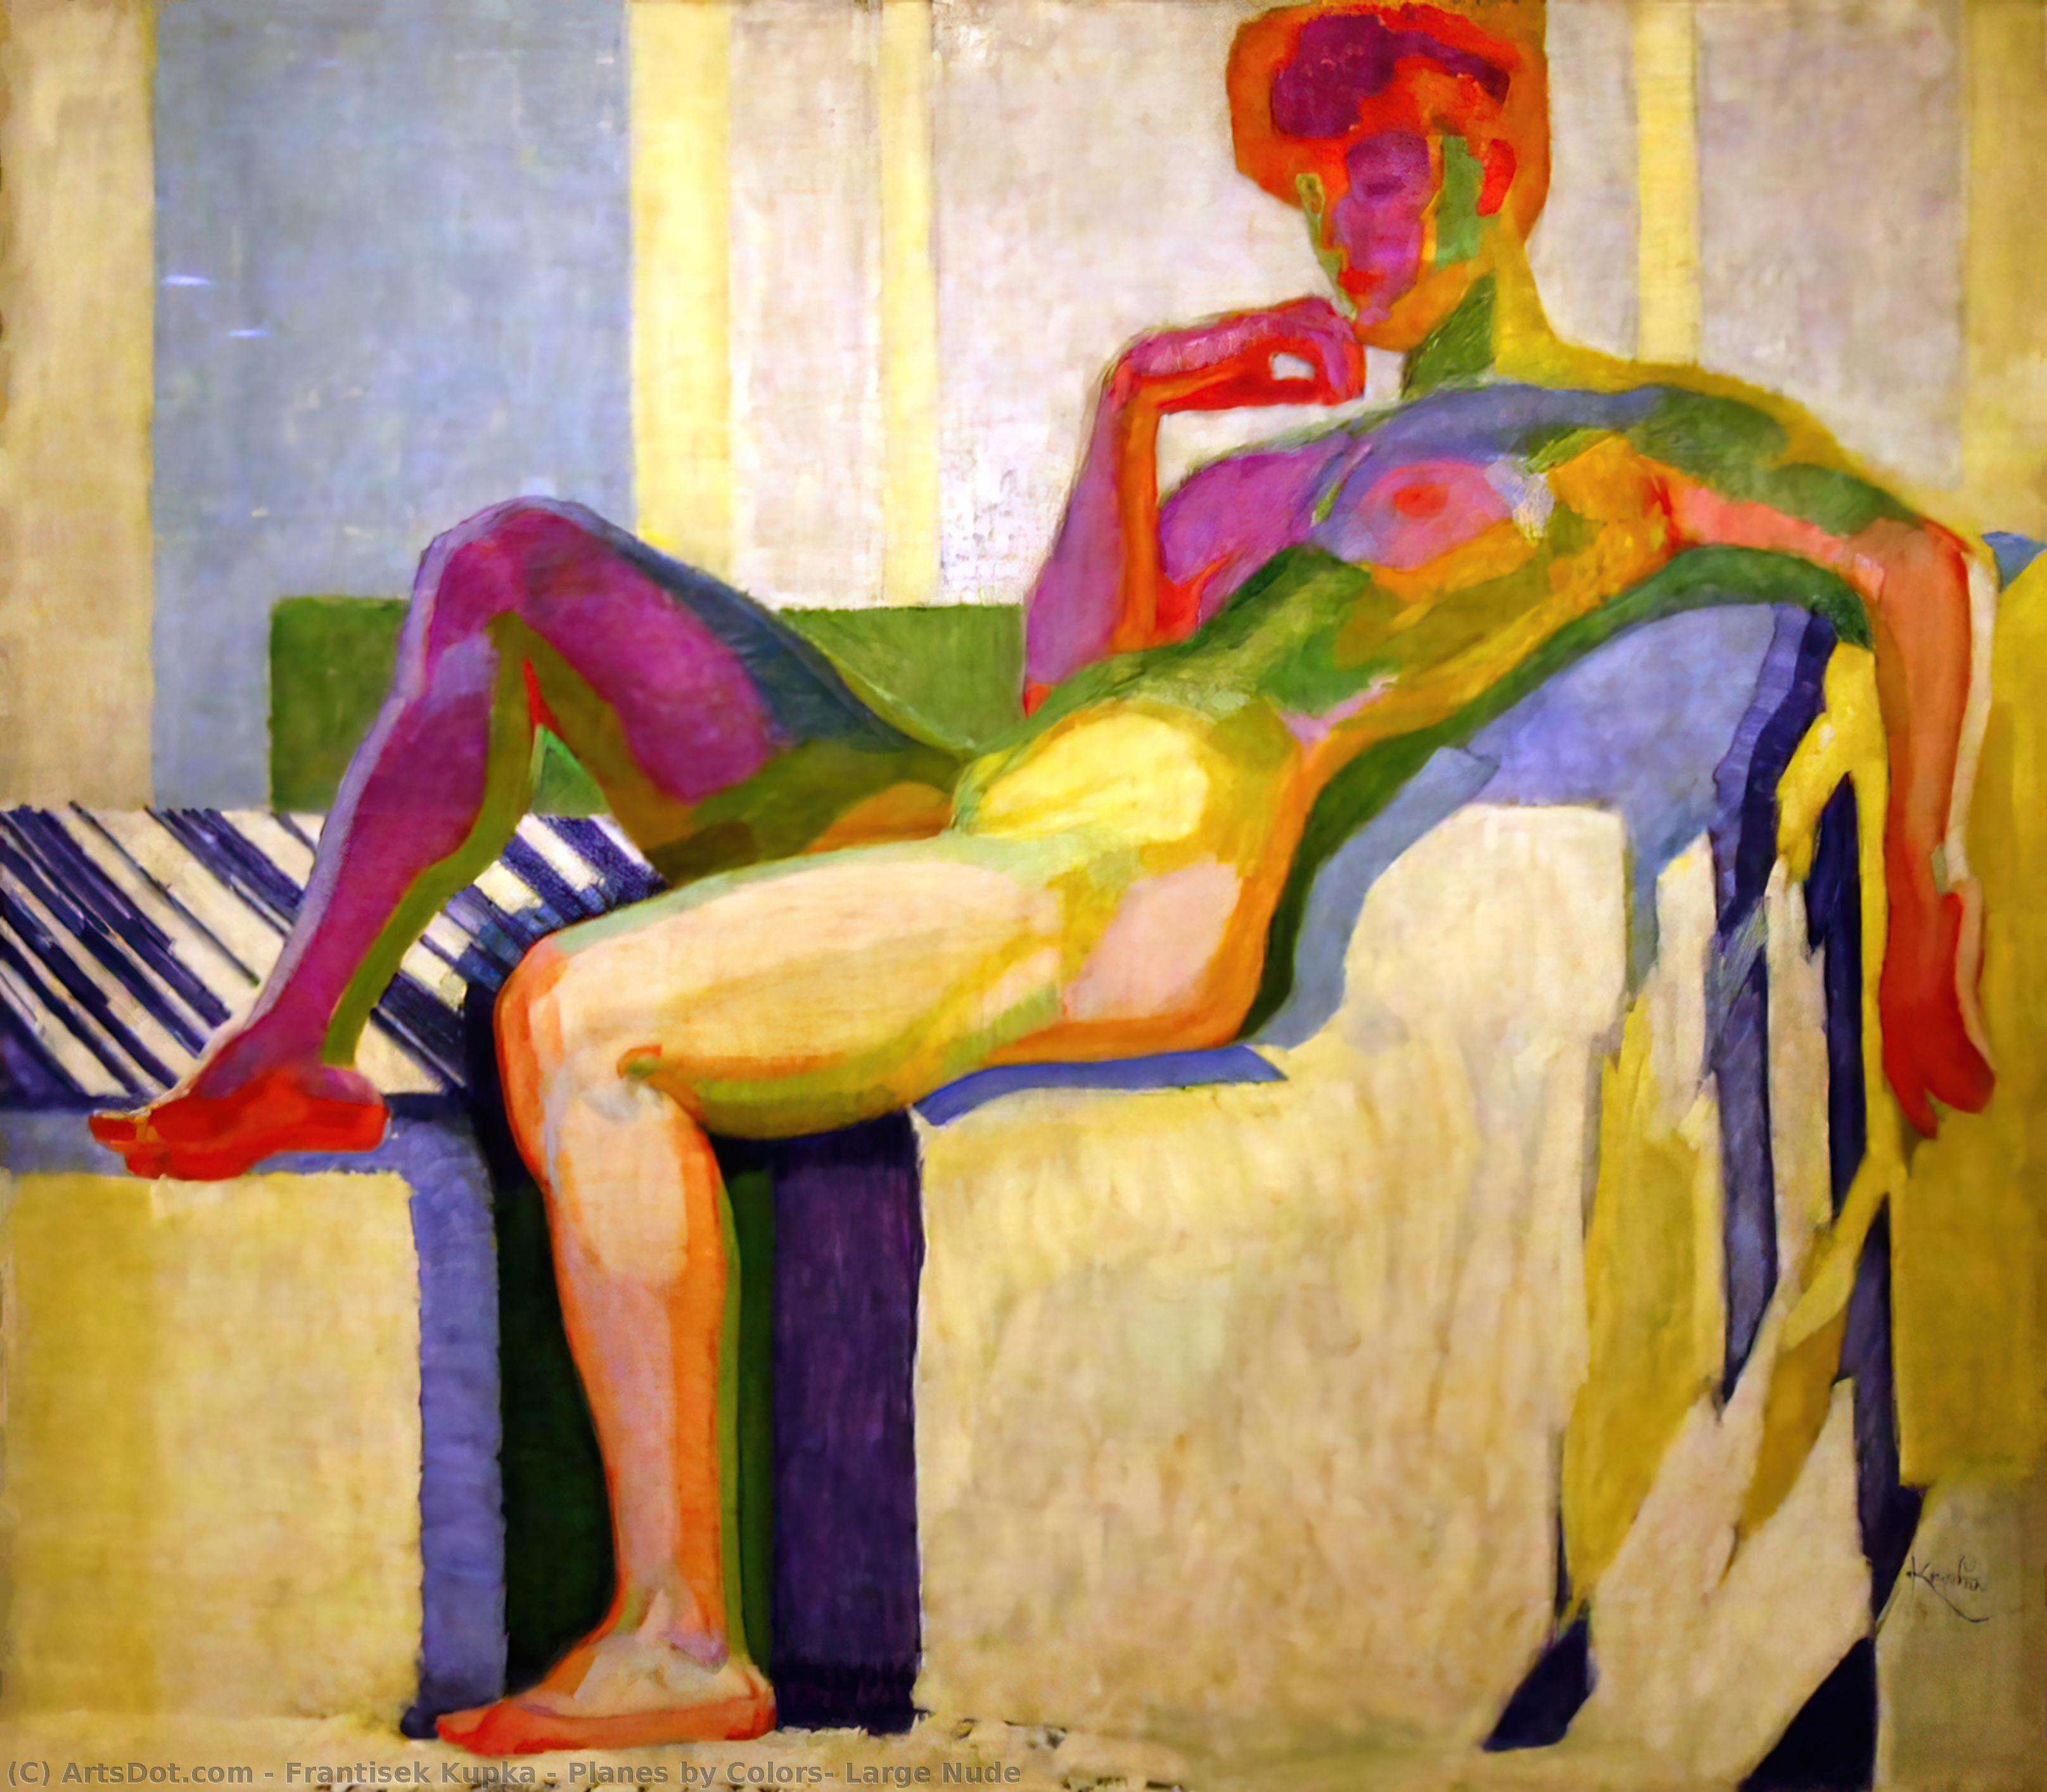 WikiOO.org - Encyclopedia of Fine Arts - Maalaus, taideteos Frantisek Kupka - Planes by Colors, Large Nude